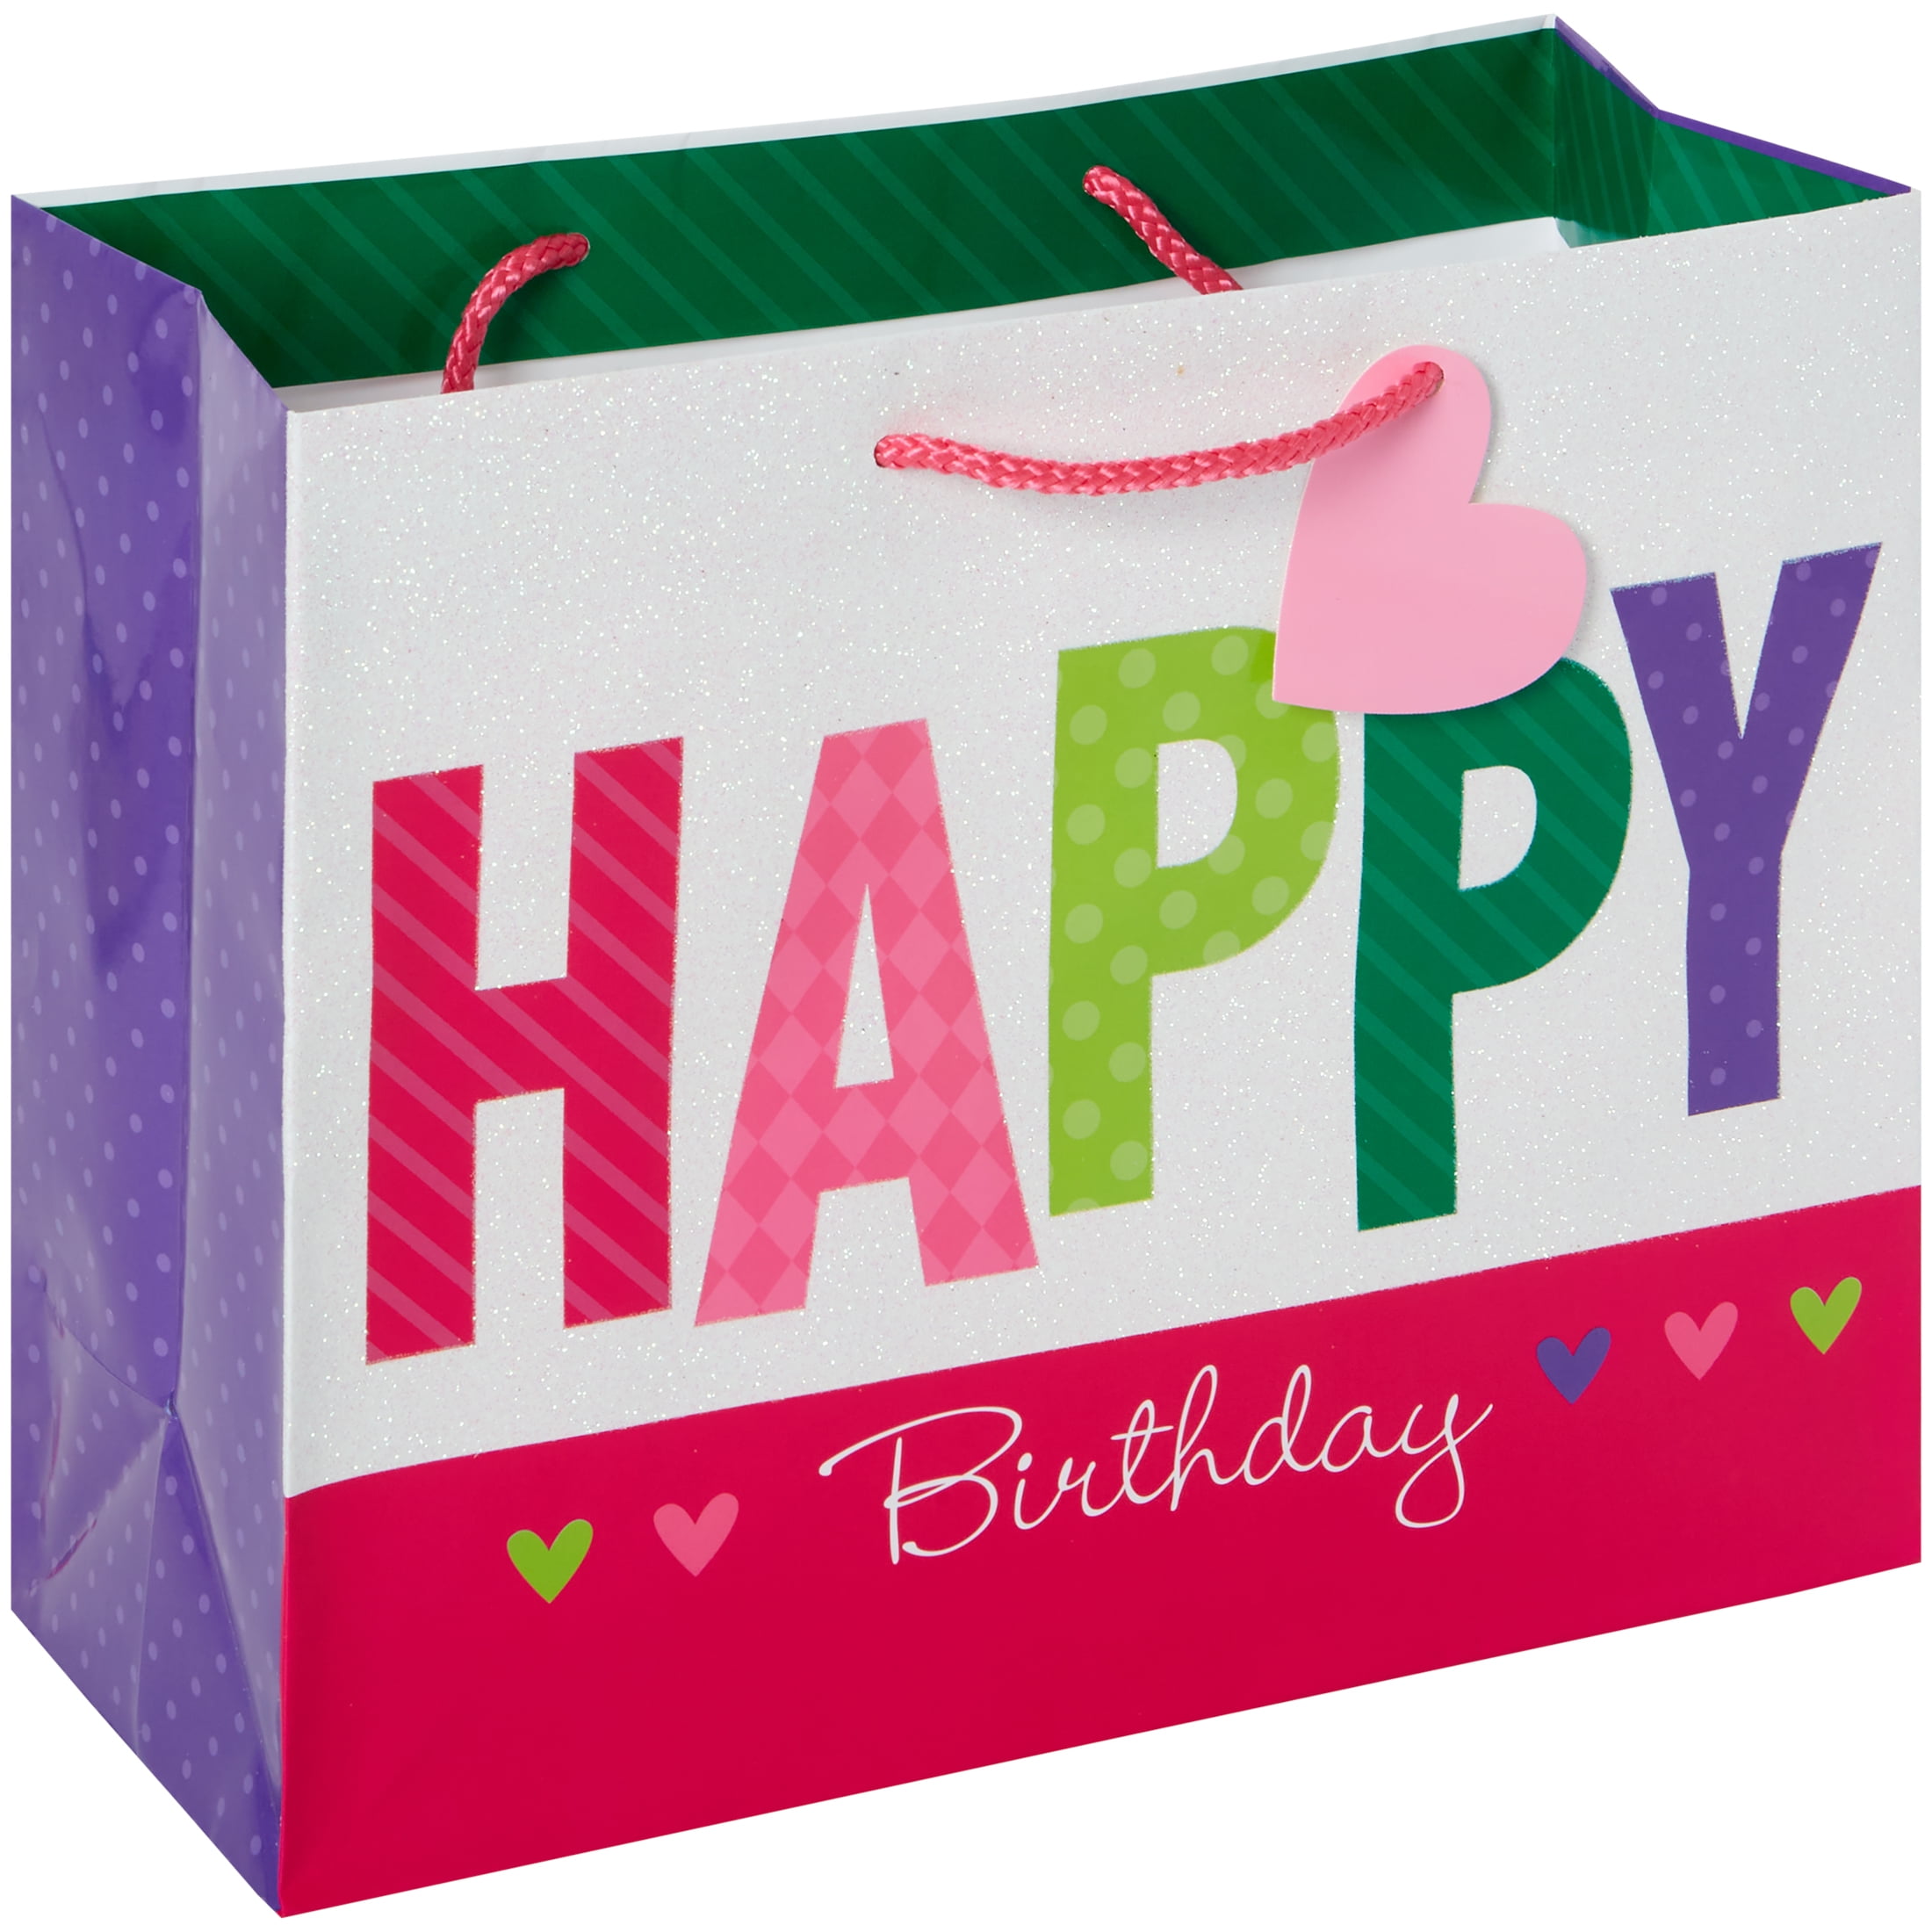 Way To Celebrate Value Gift Bag, Birthday, Pink, Green, Purple, Iridescent Glitter